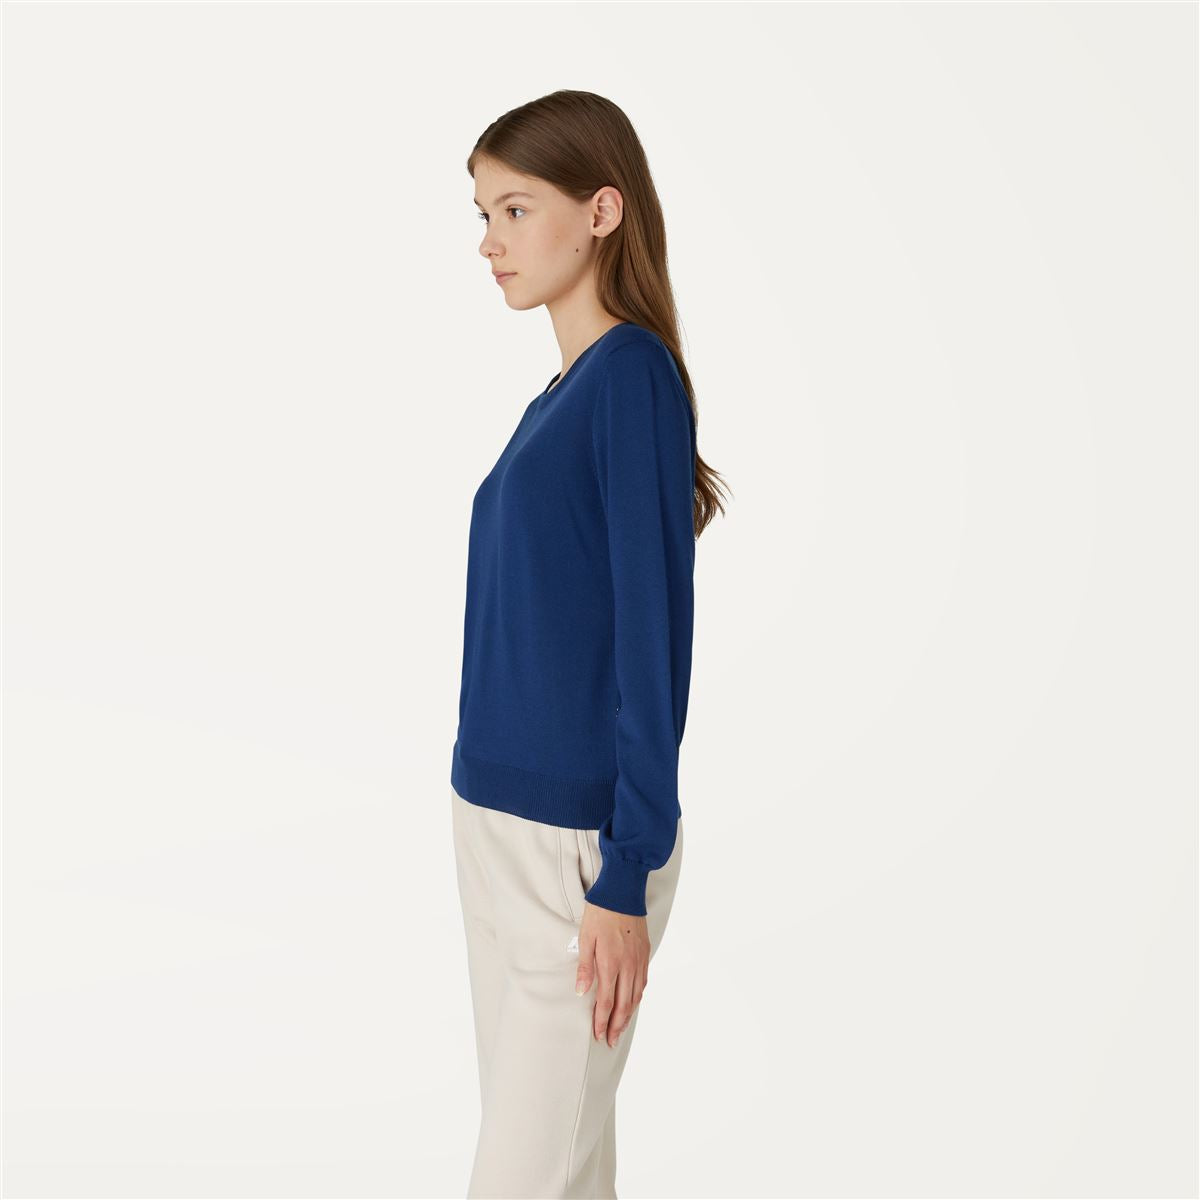 ABBI MERINO - Knitwear - Pull  Over - Woman - Blue